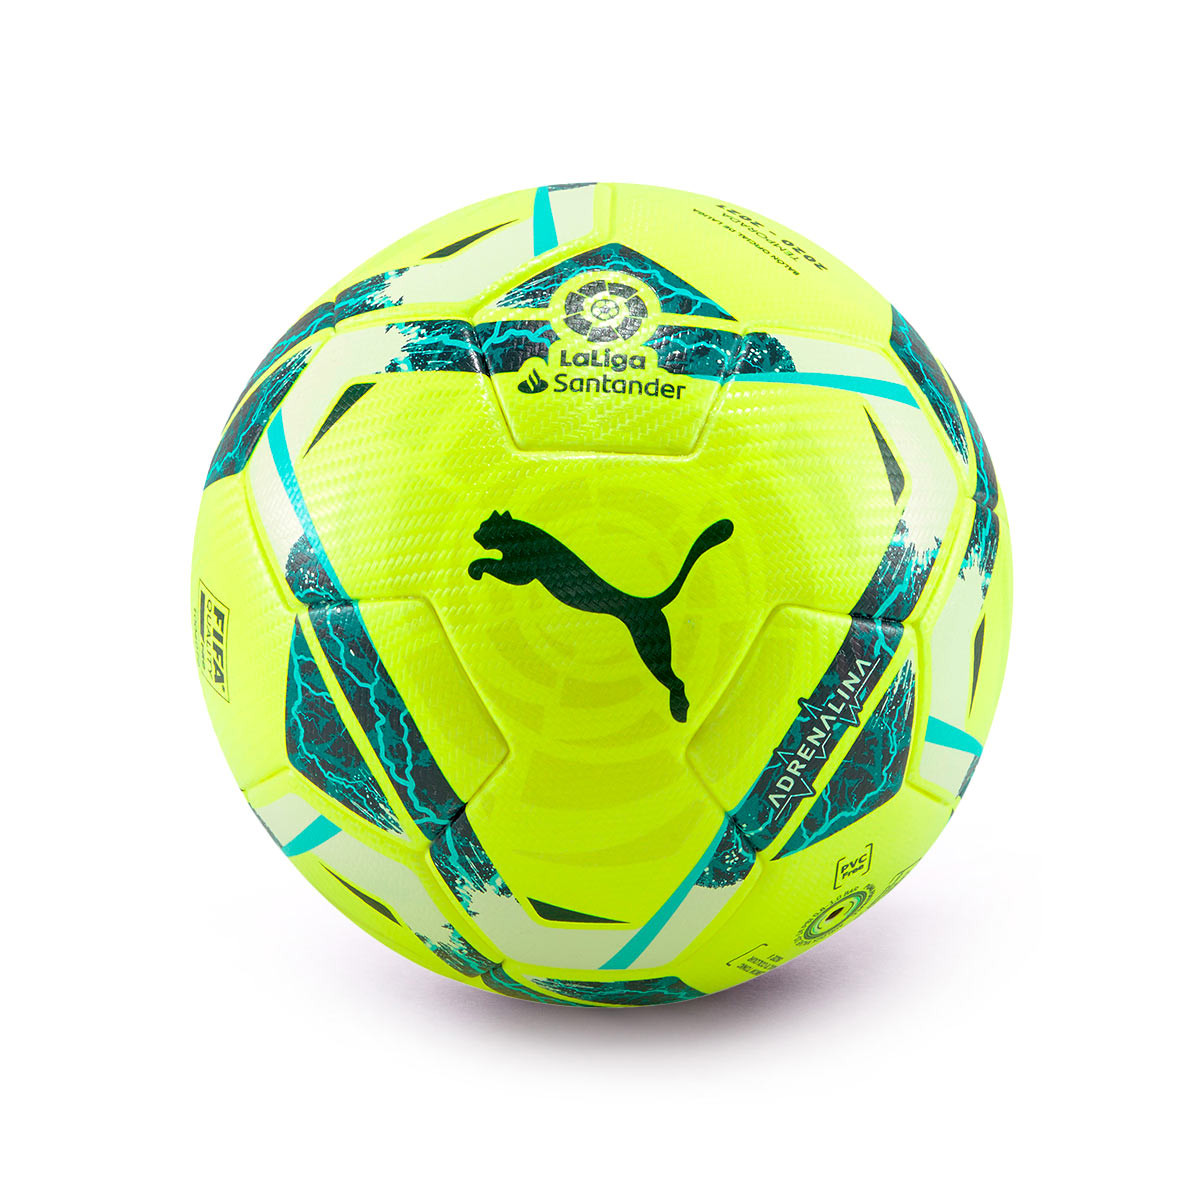 Ball Puma Laliga Adrenalina 2020 2021 Fifa Quality Pro Wp Fluor Orange Multi Colour Futbol Emotion